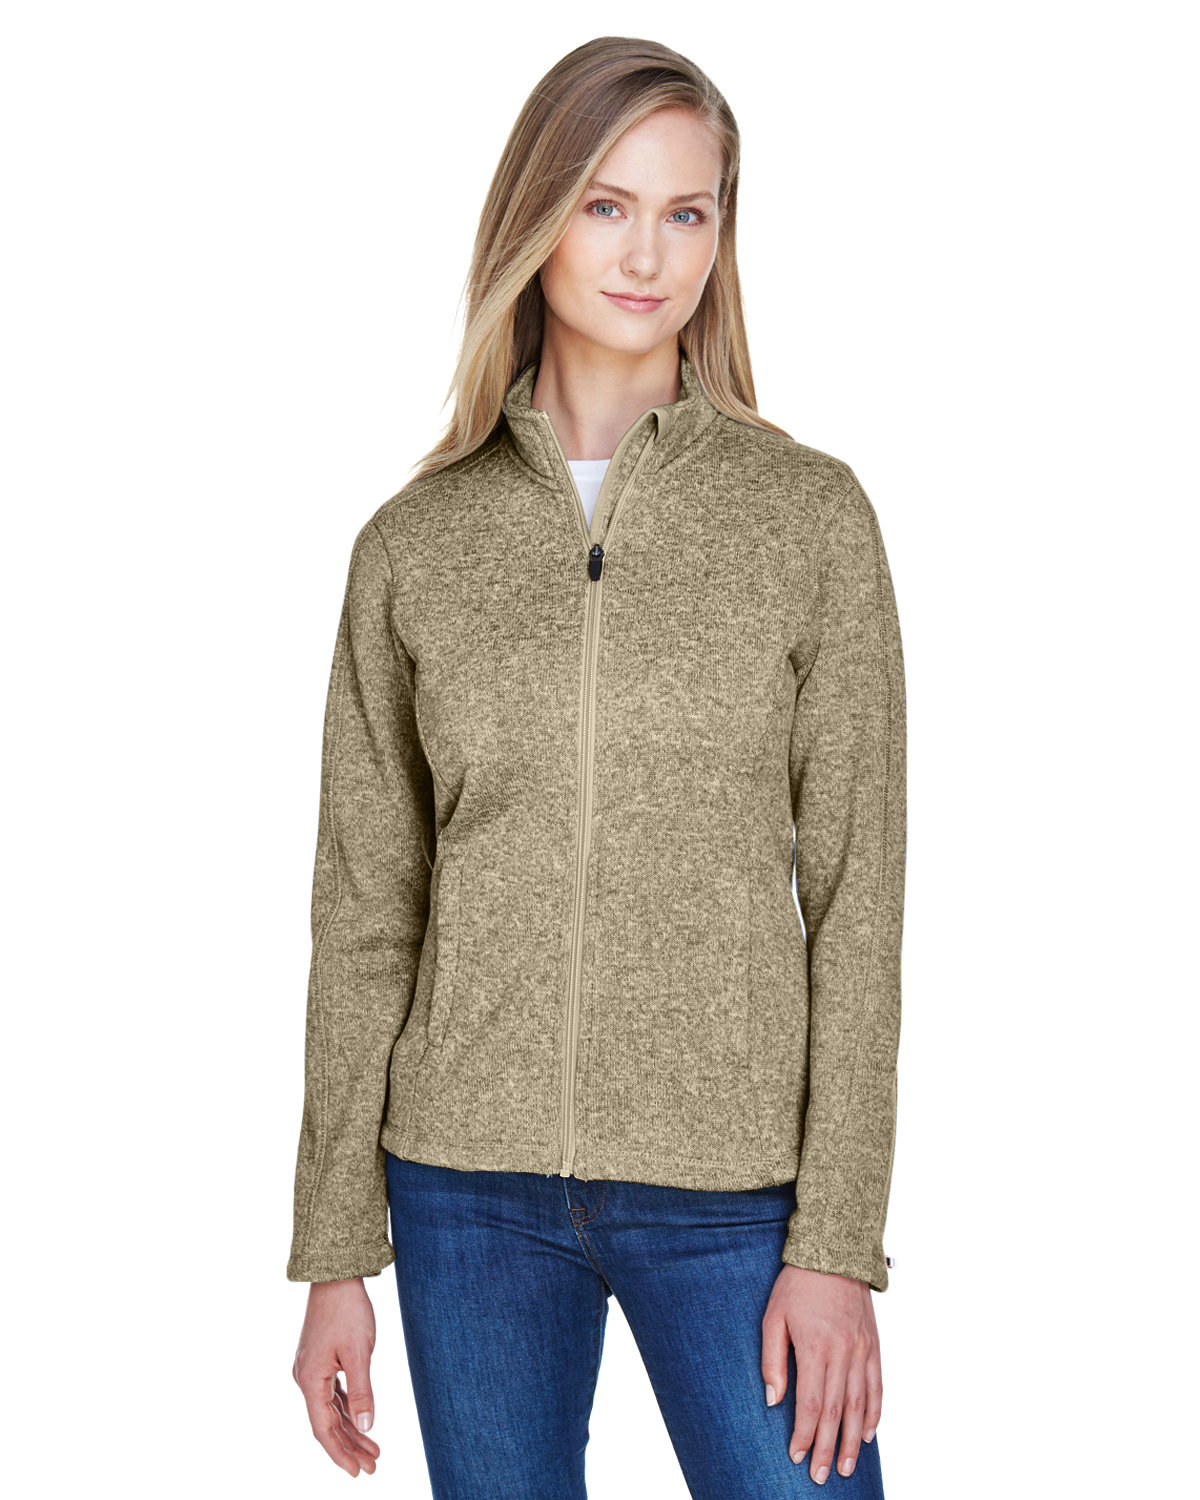 CIBPA Thunder Bay Ladies Bristol Sweater Fleece Full Zip – Wear it Proud